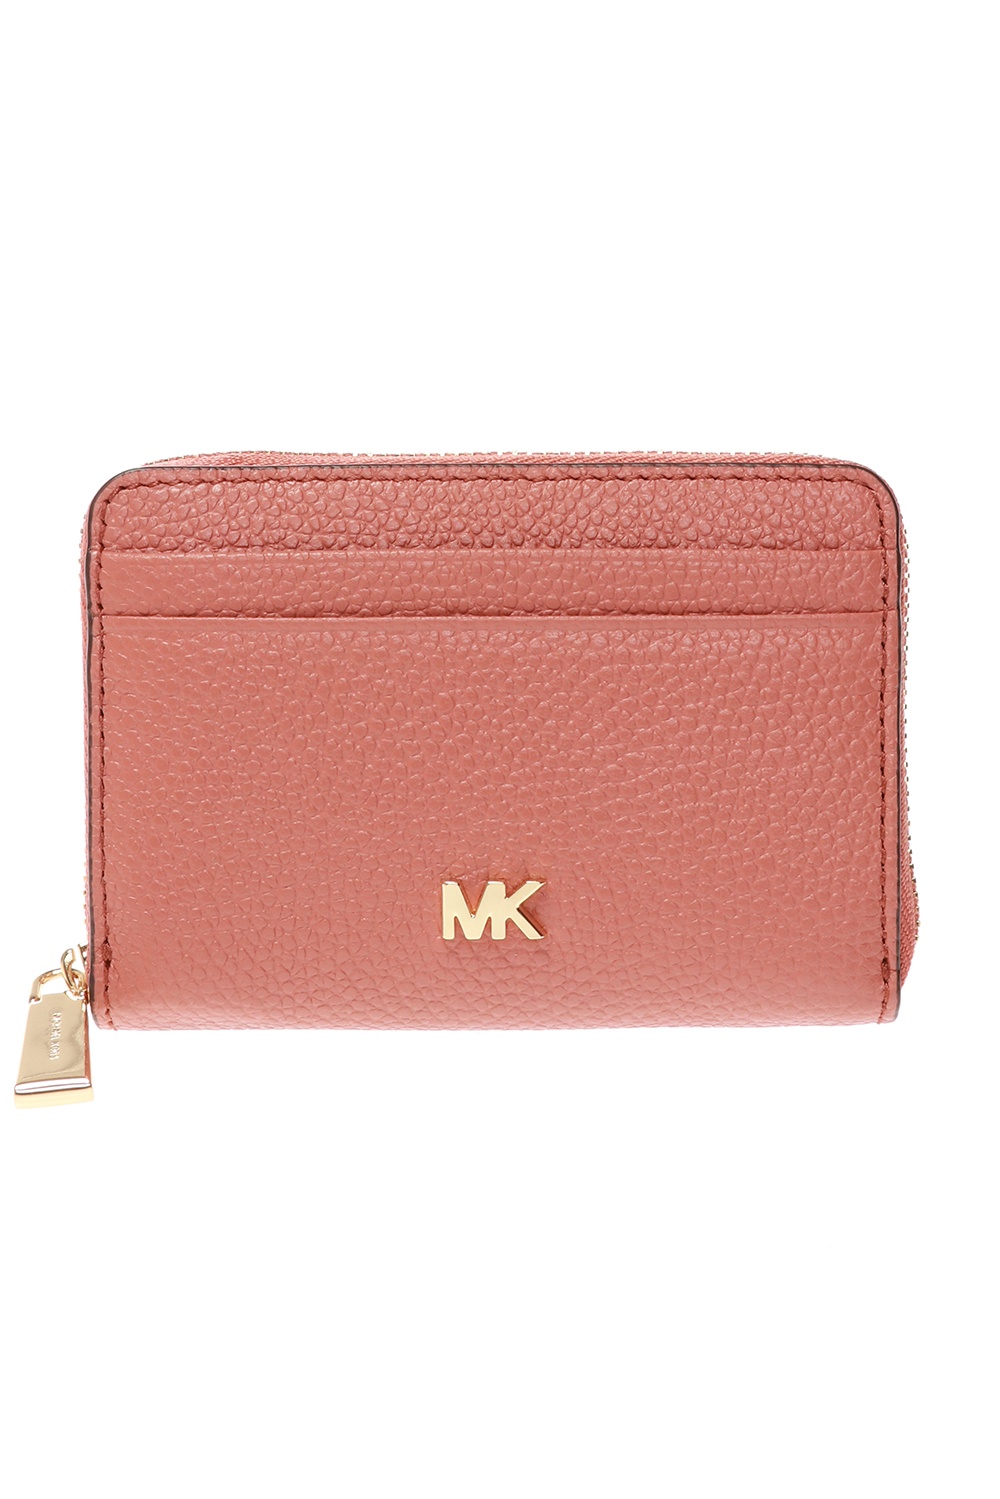 mk wallet australia